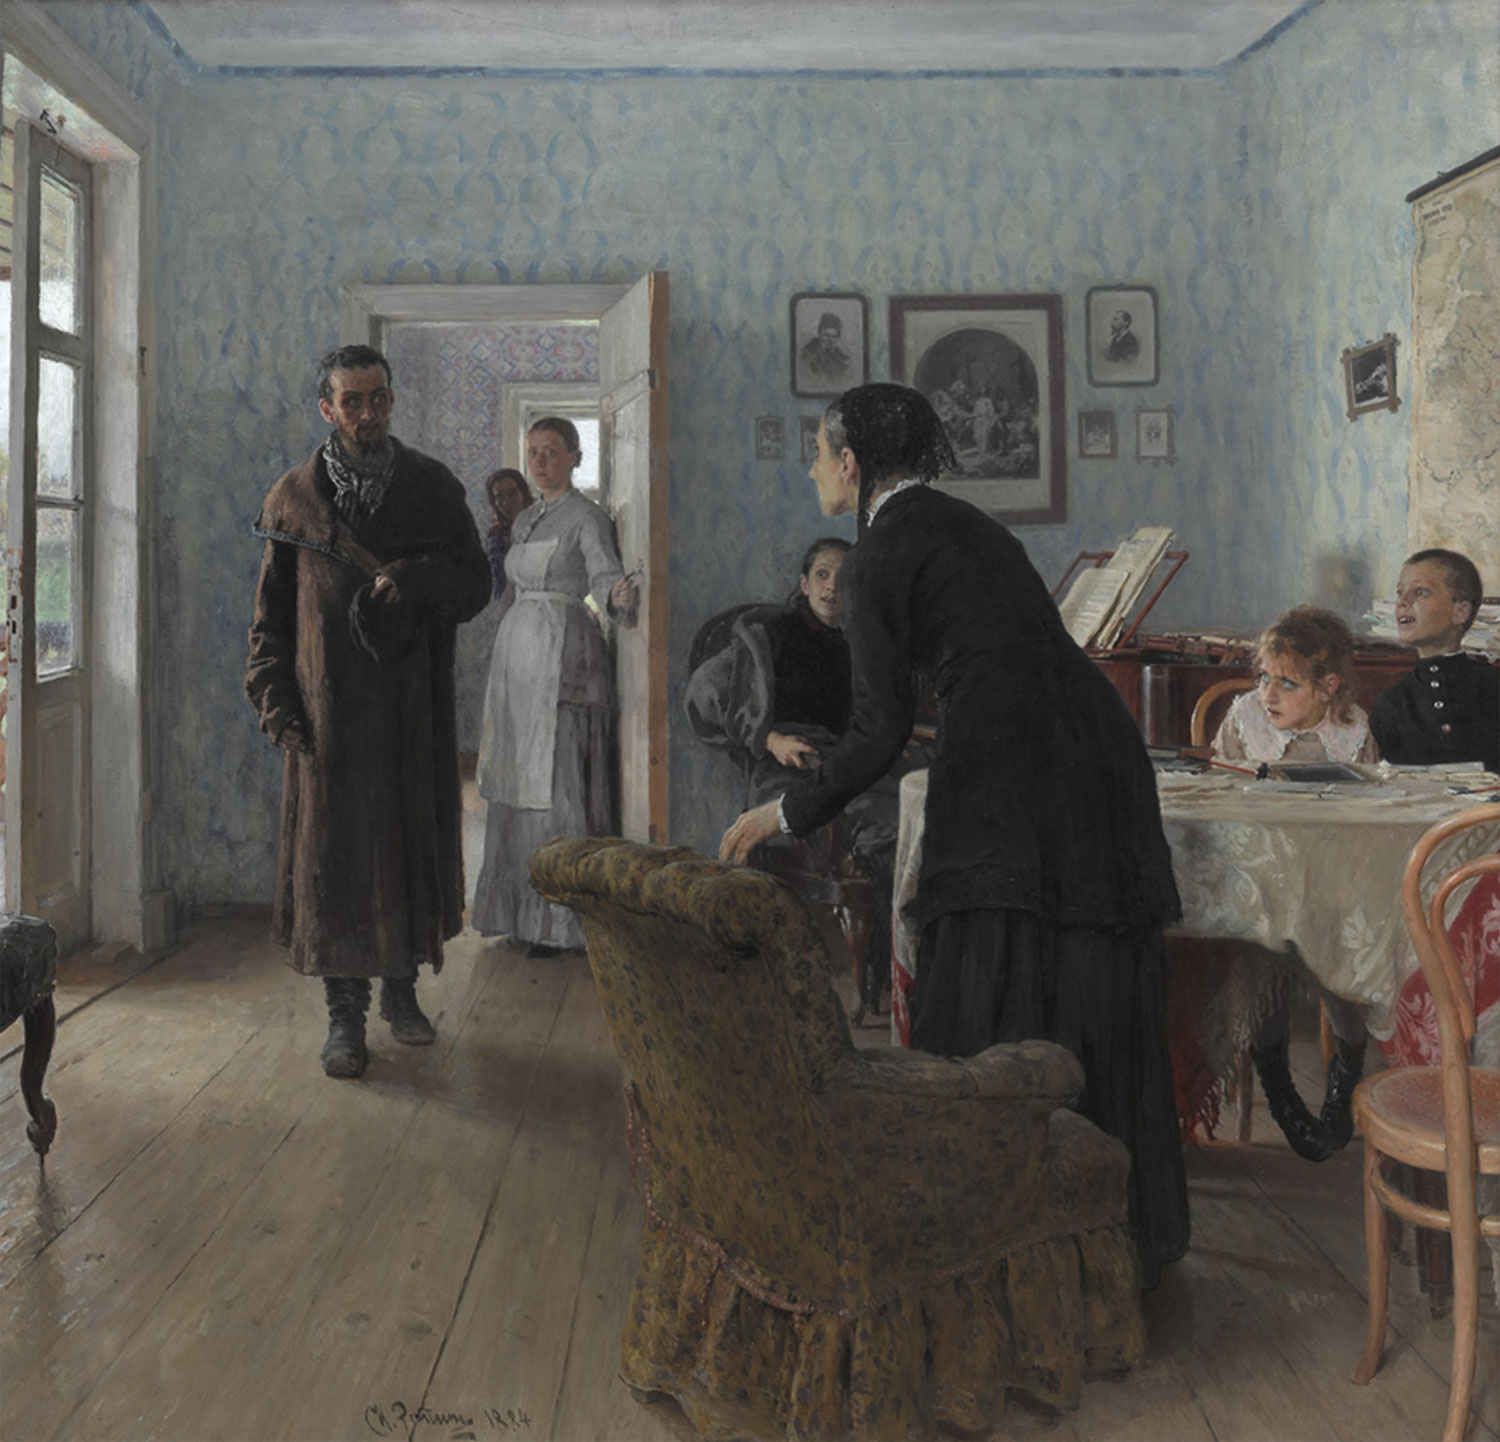 &laquo;Не ждали&raquo;, Илья Репин, 1884&ndash;1888